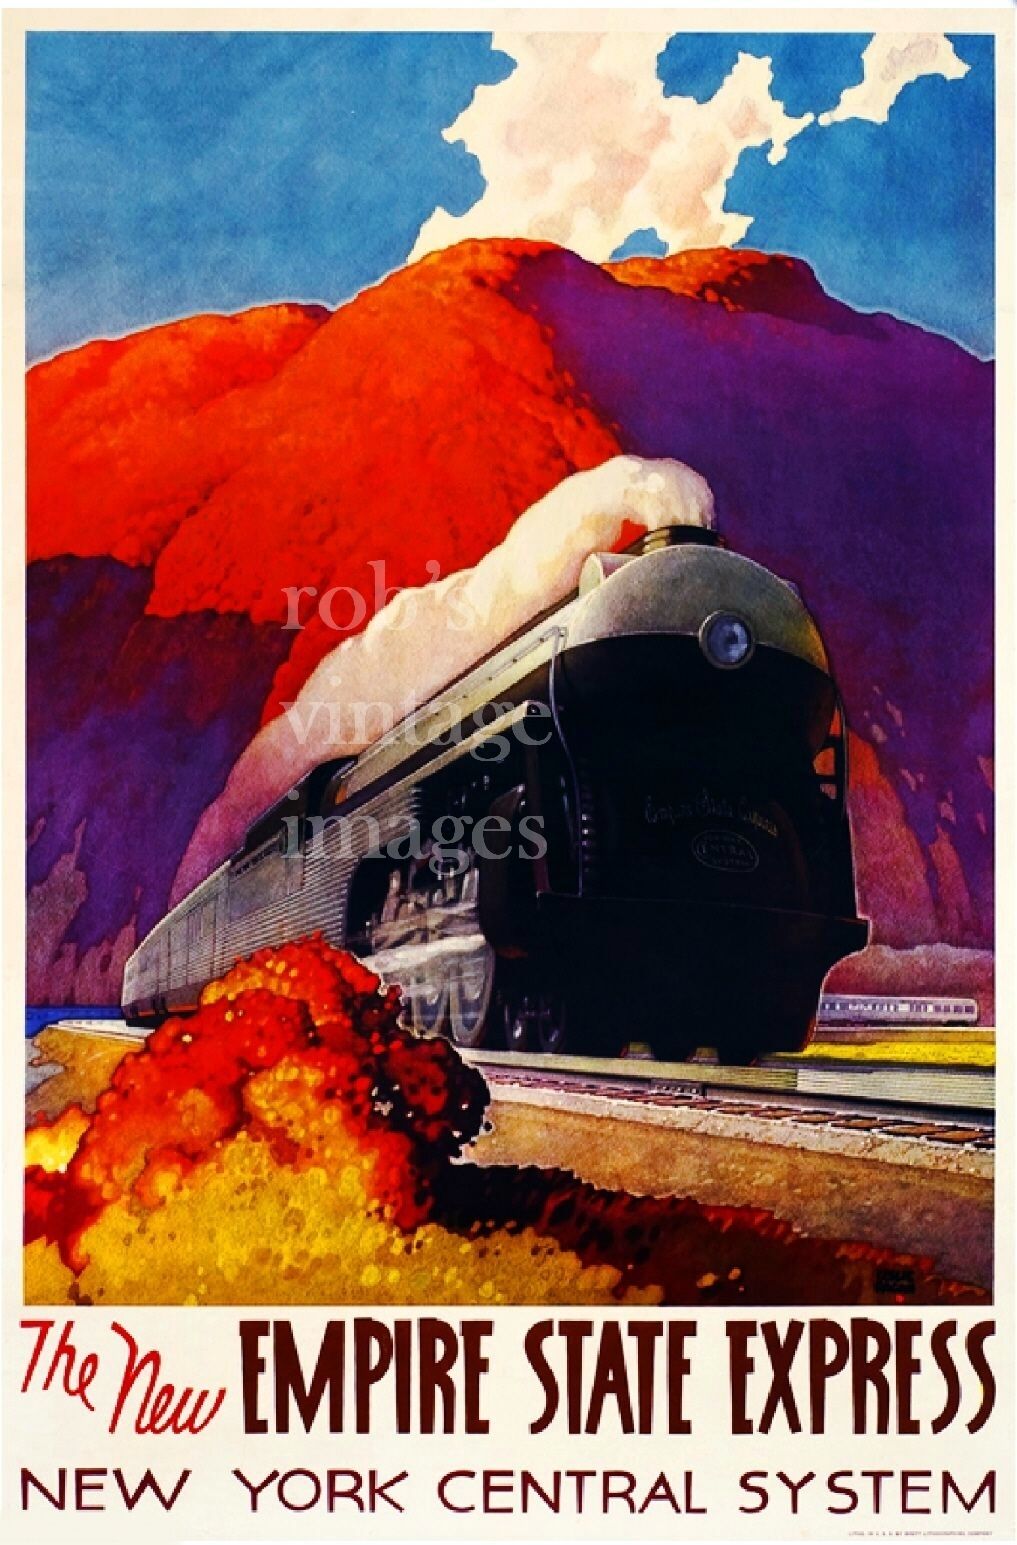  New York Central Train Poster Railroad Empire State Express art deco print 1939